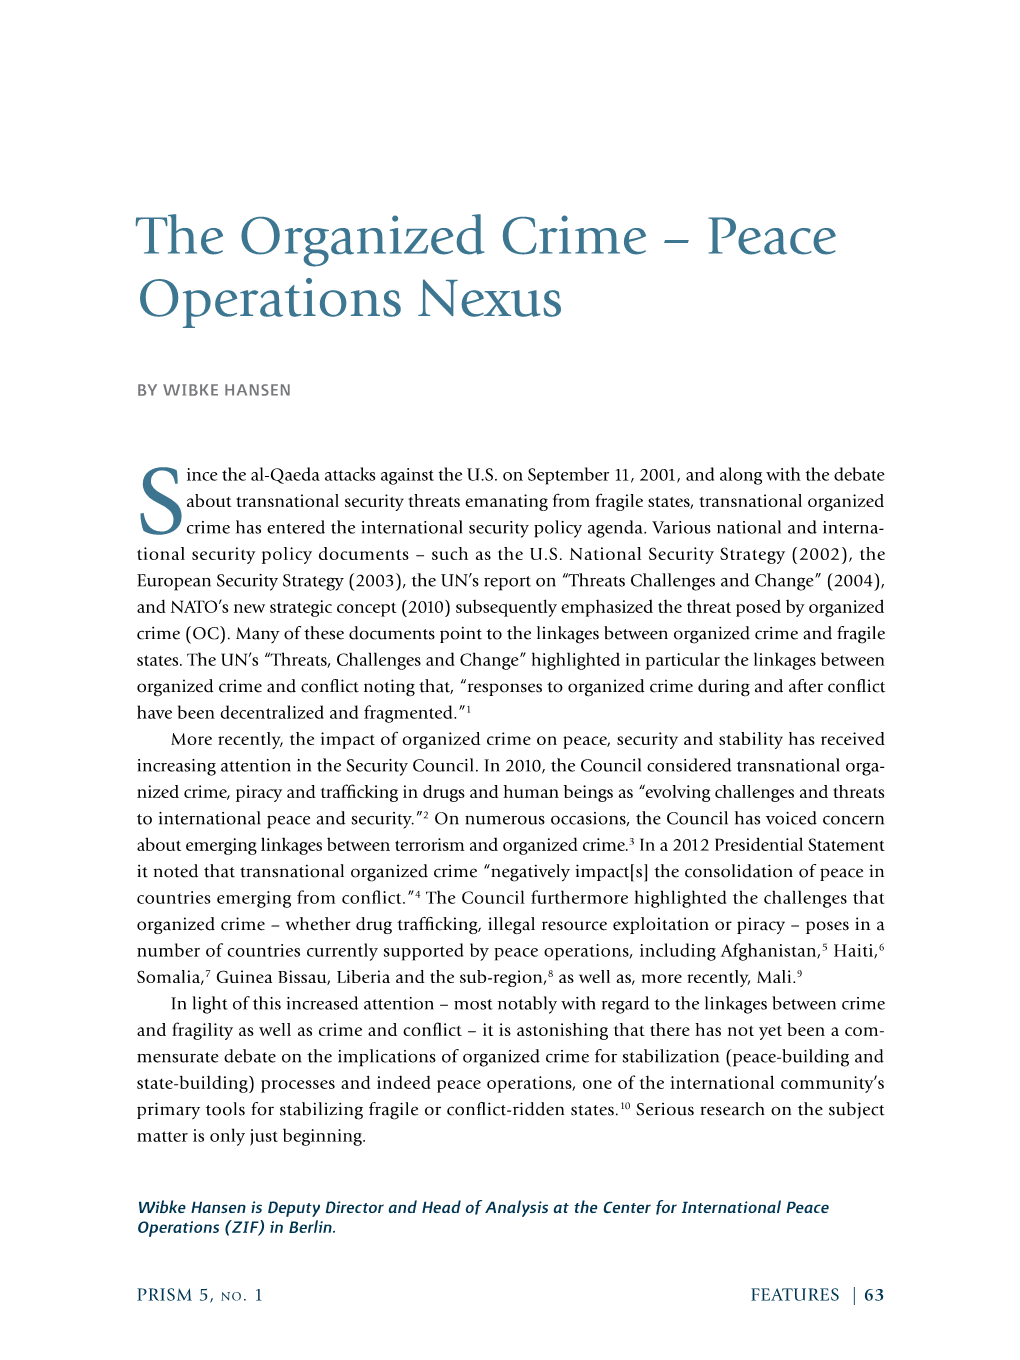 The Organized Crime – Peace Operations Nexus